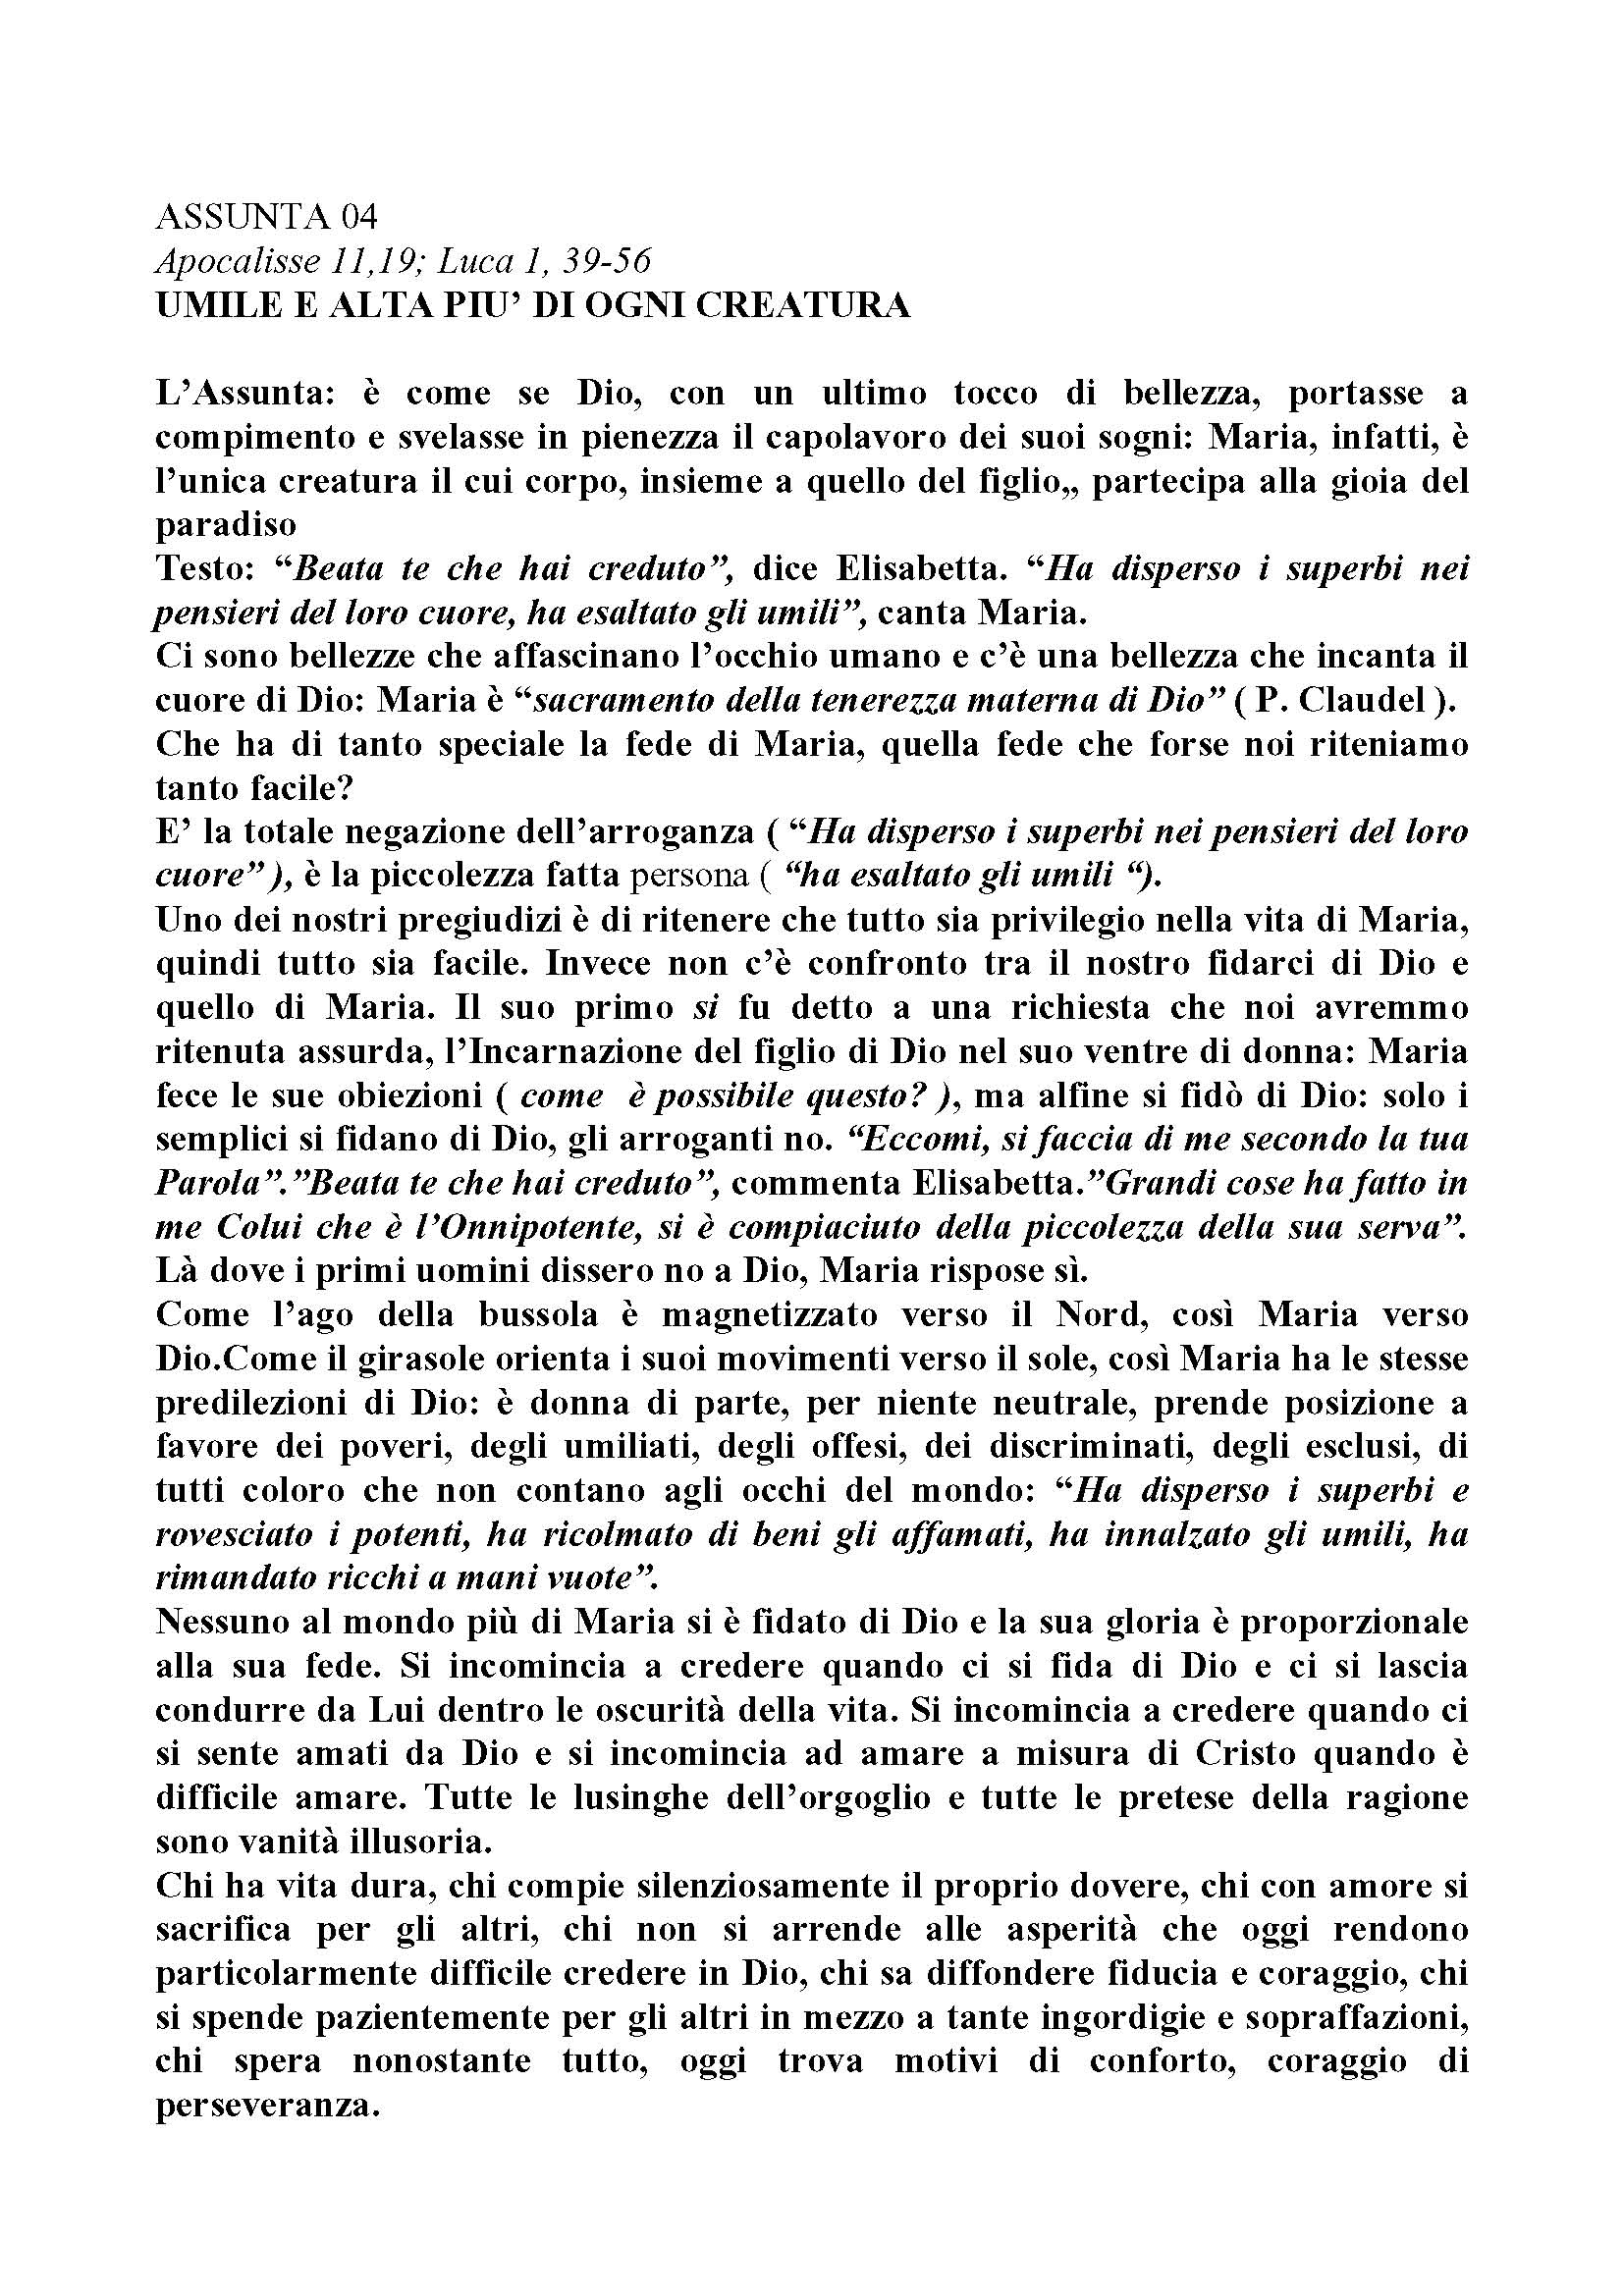 ASSUNTA04_Apocalisse_UMILE_E_ALTA_PIU_DI_OGNI_CREATURA.pdf